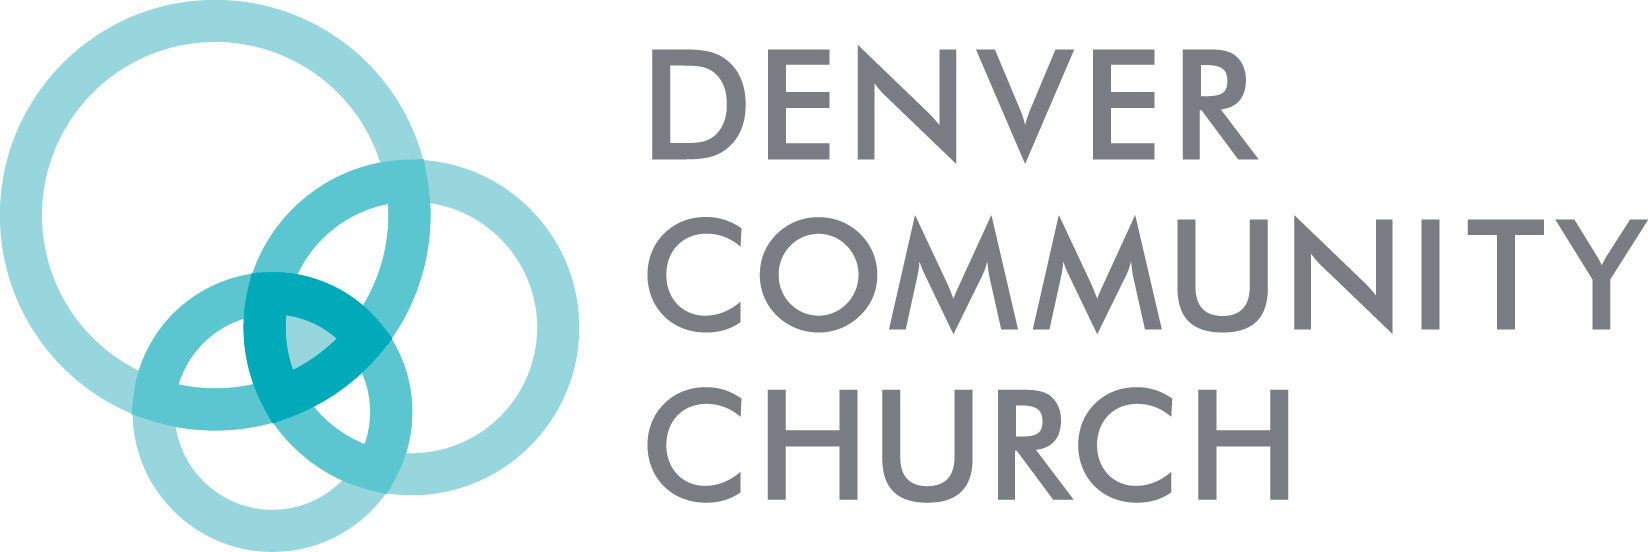 Denver Community Church